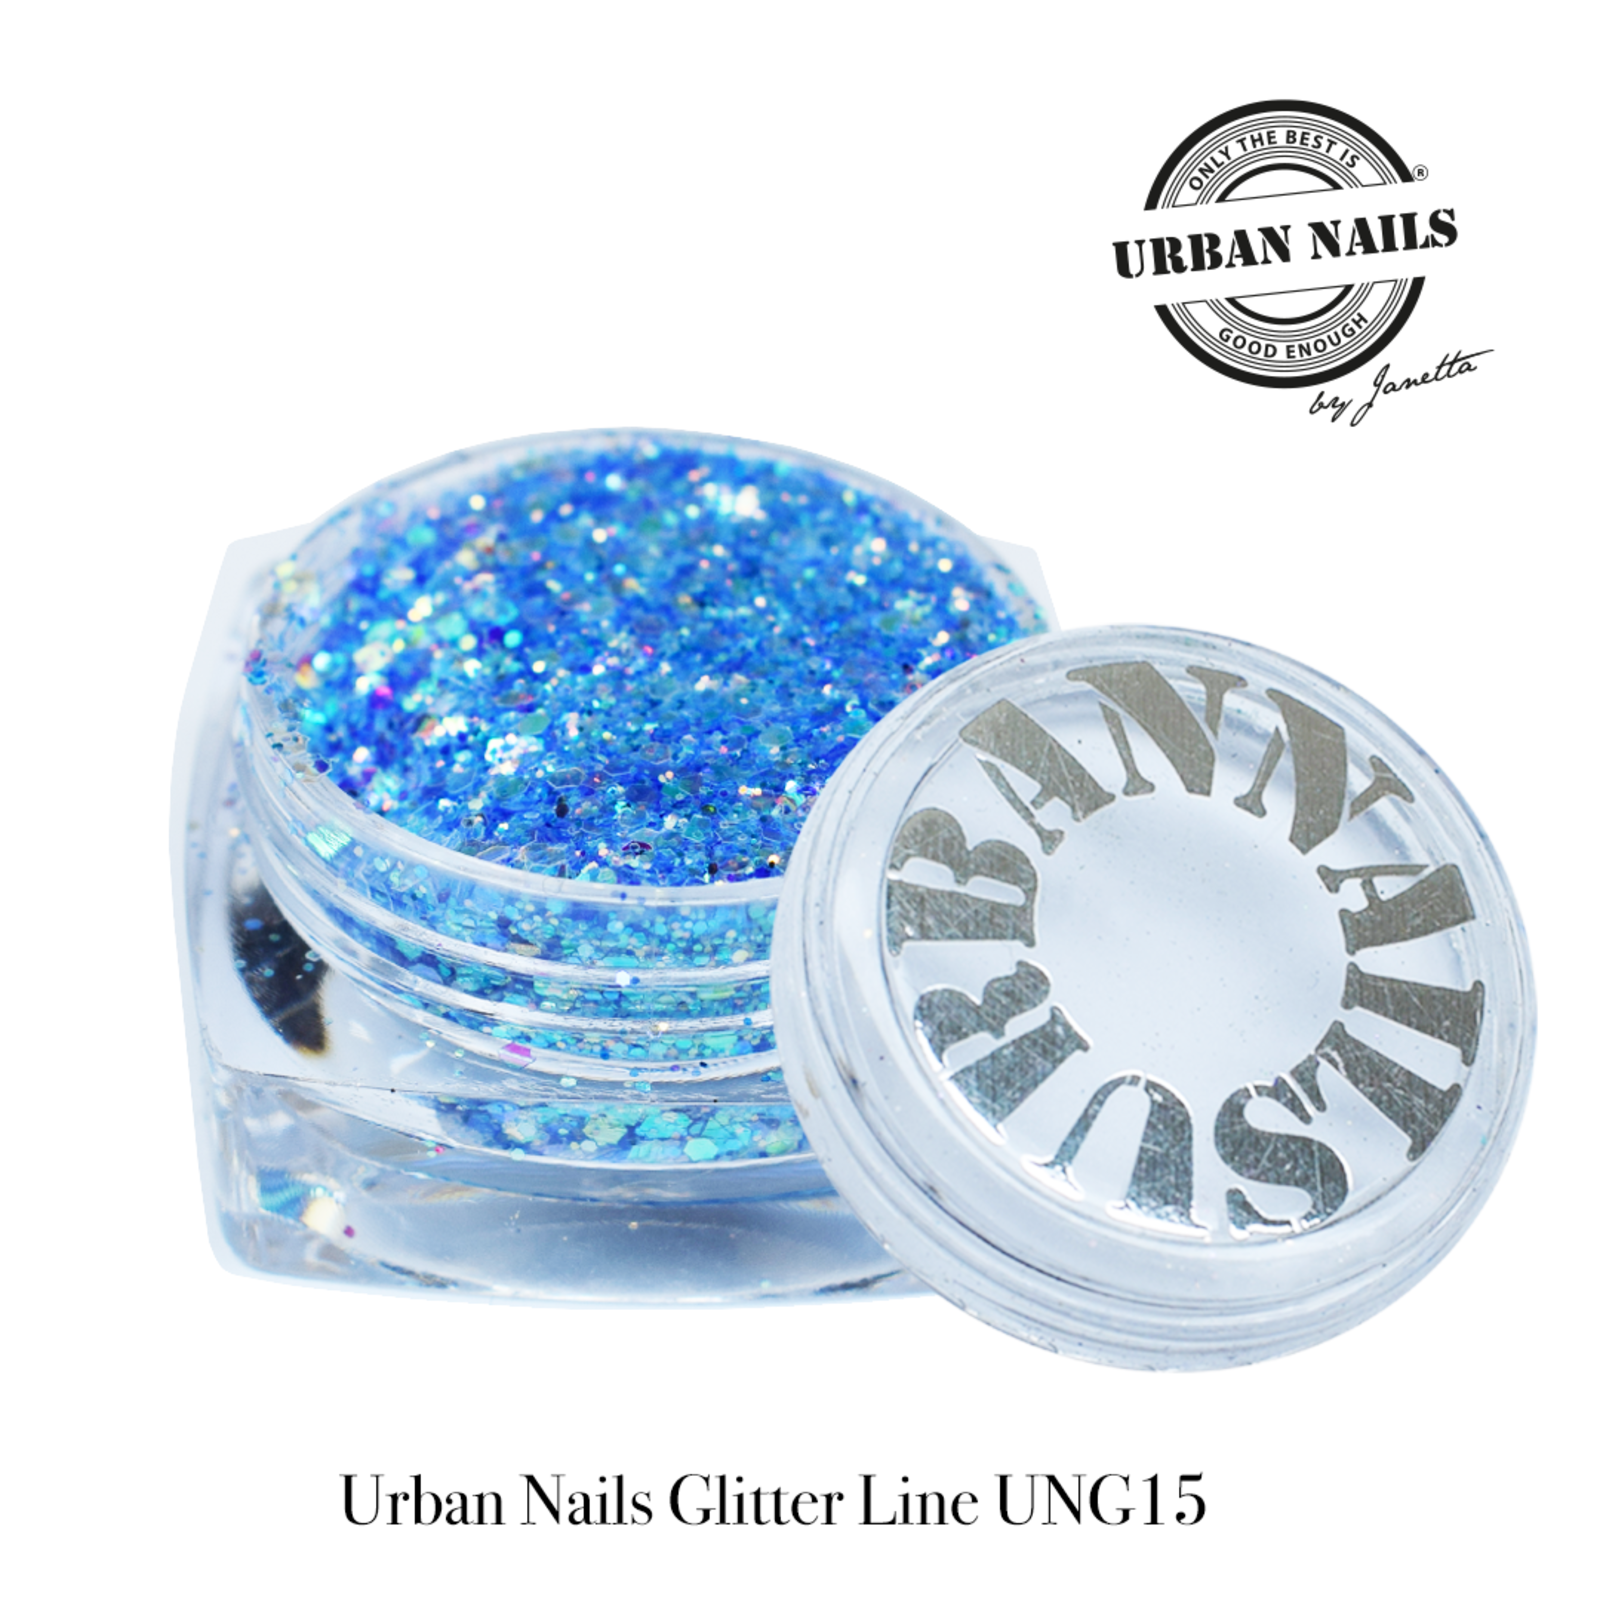 Urban nails Glitter Line UNG15